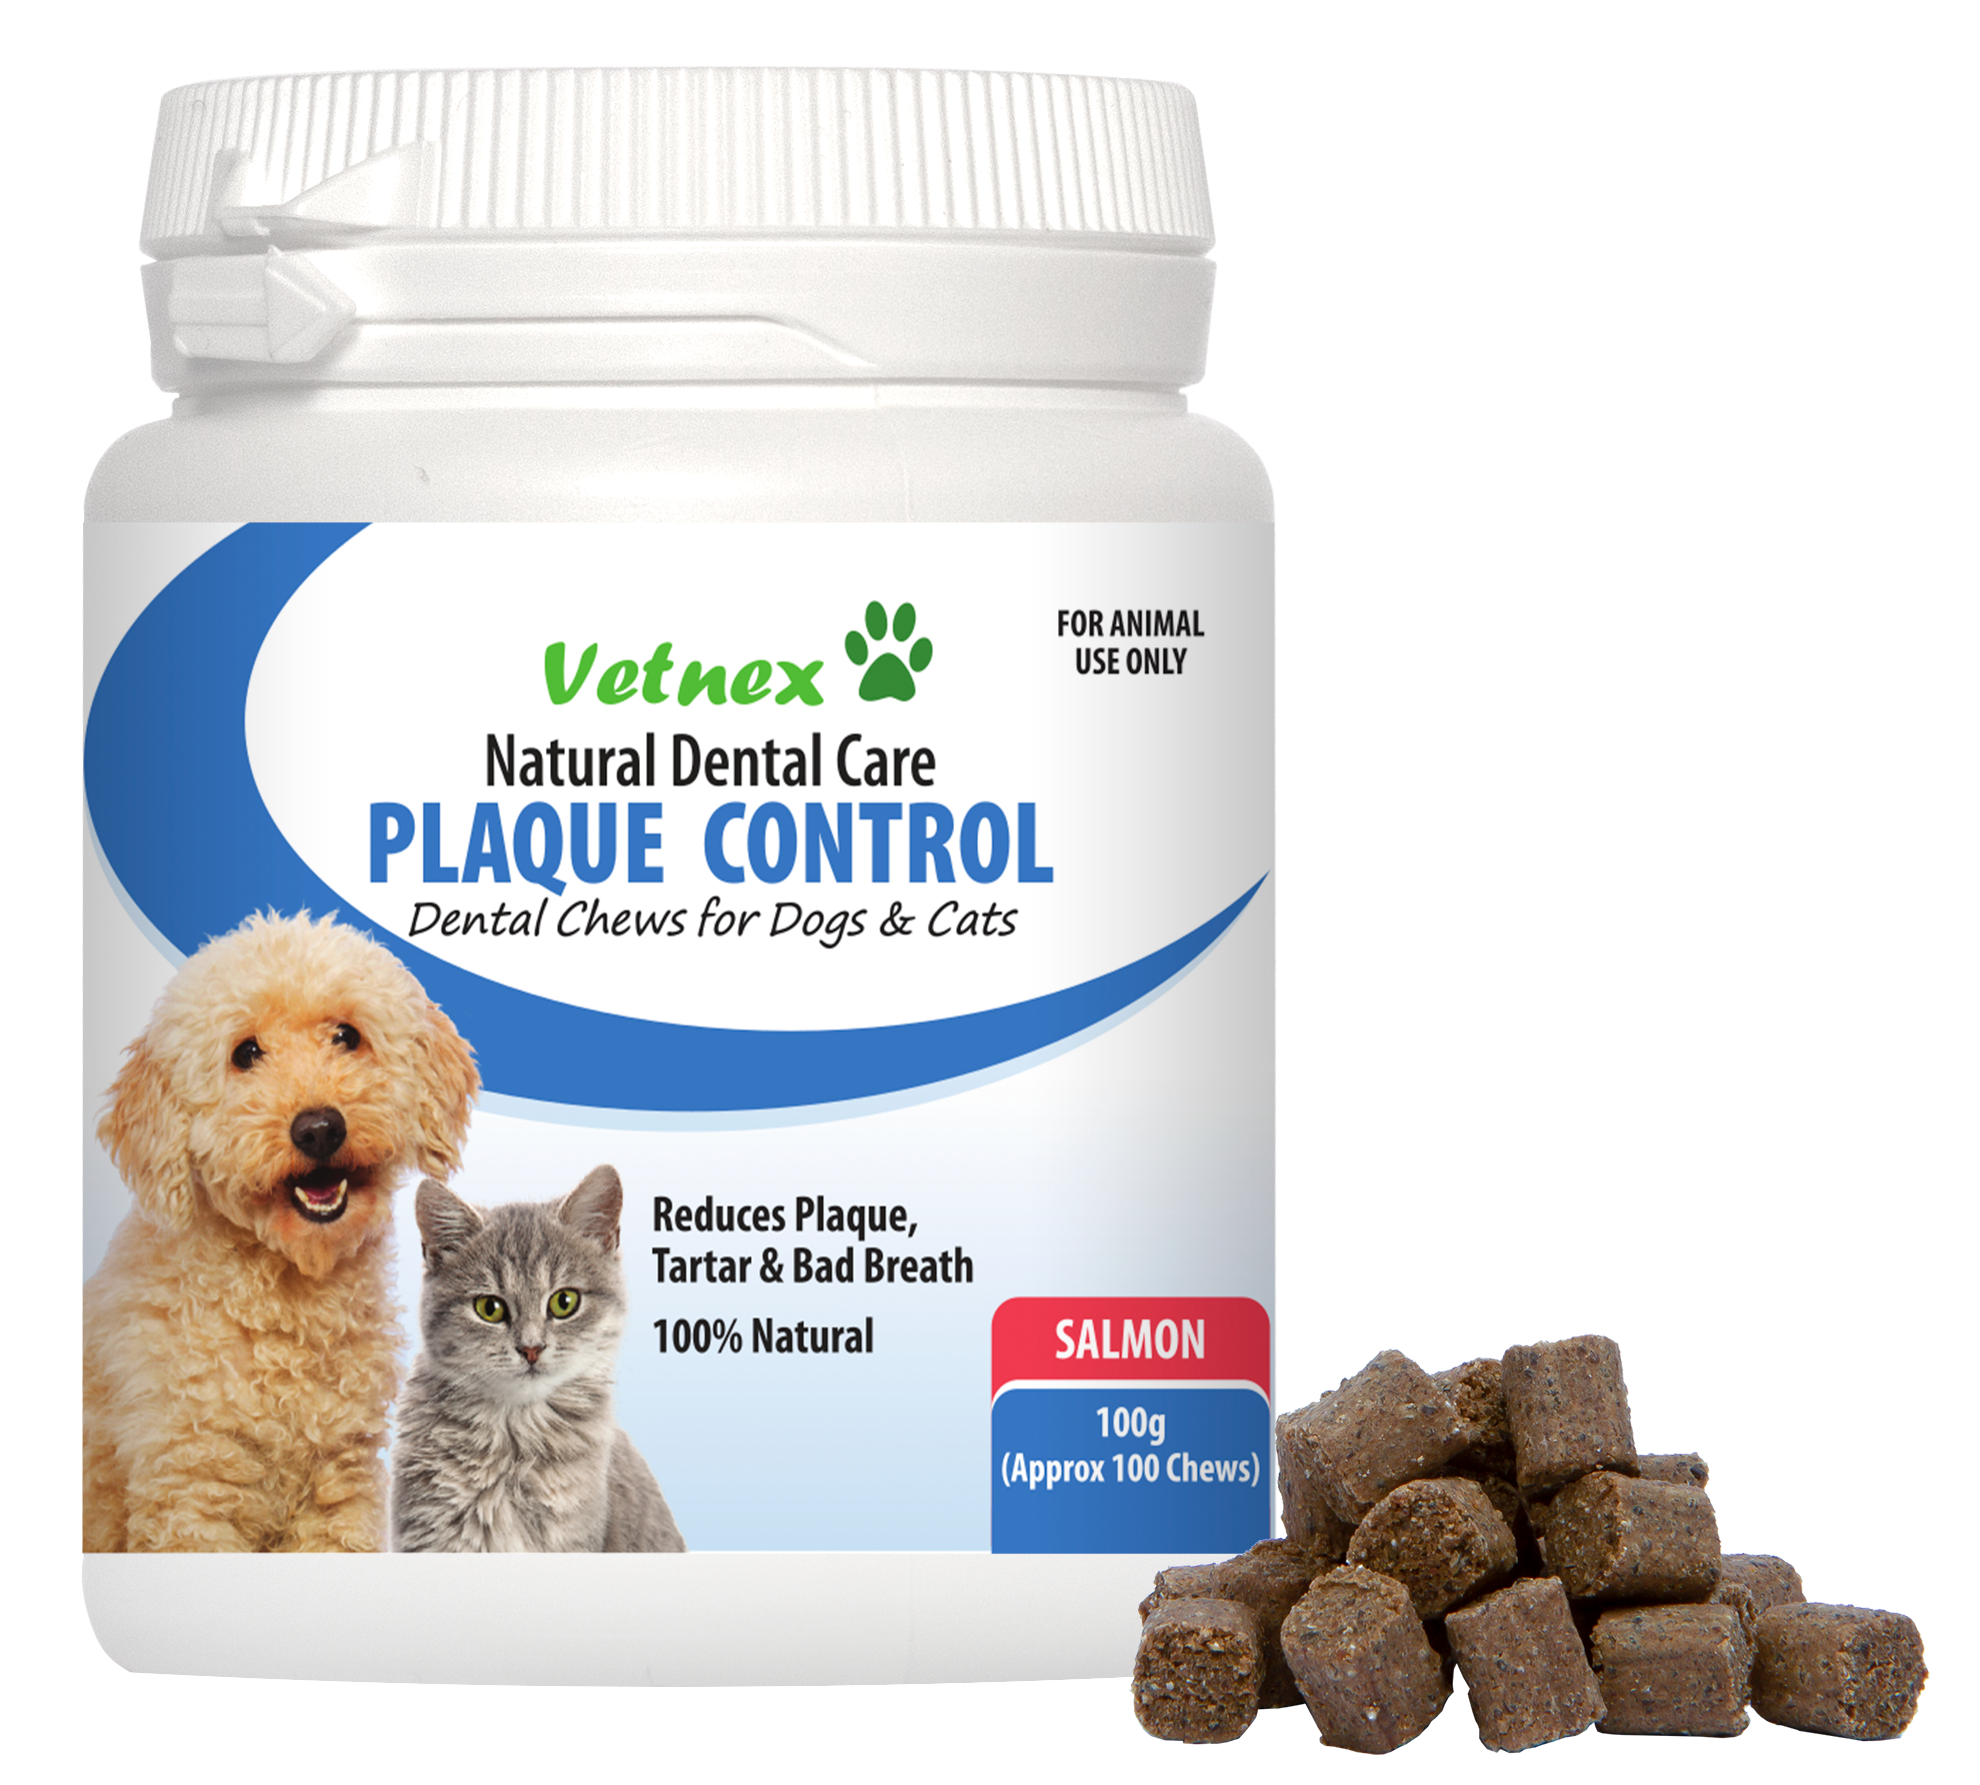 Vetnex Plaque Control Dental Chews (Salmon) for Dogs & Cats 100g/100 chews